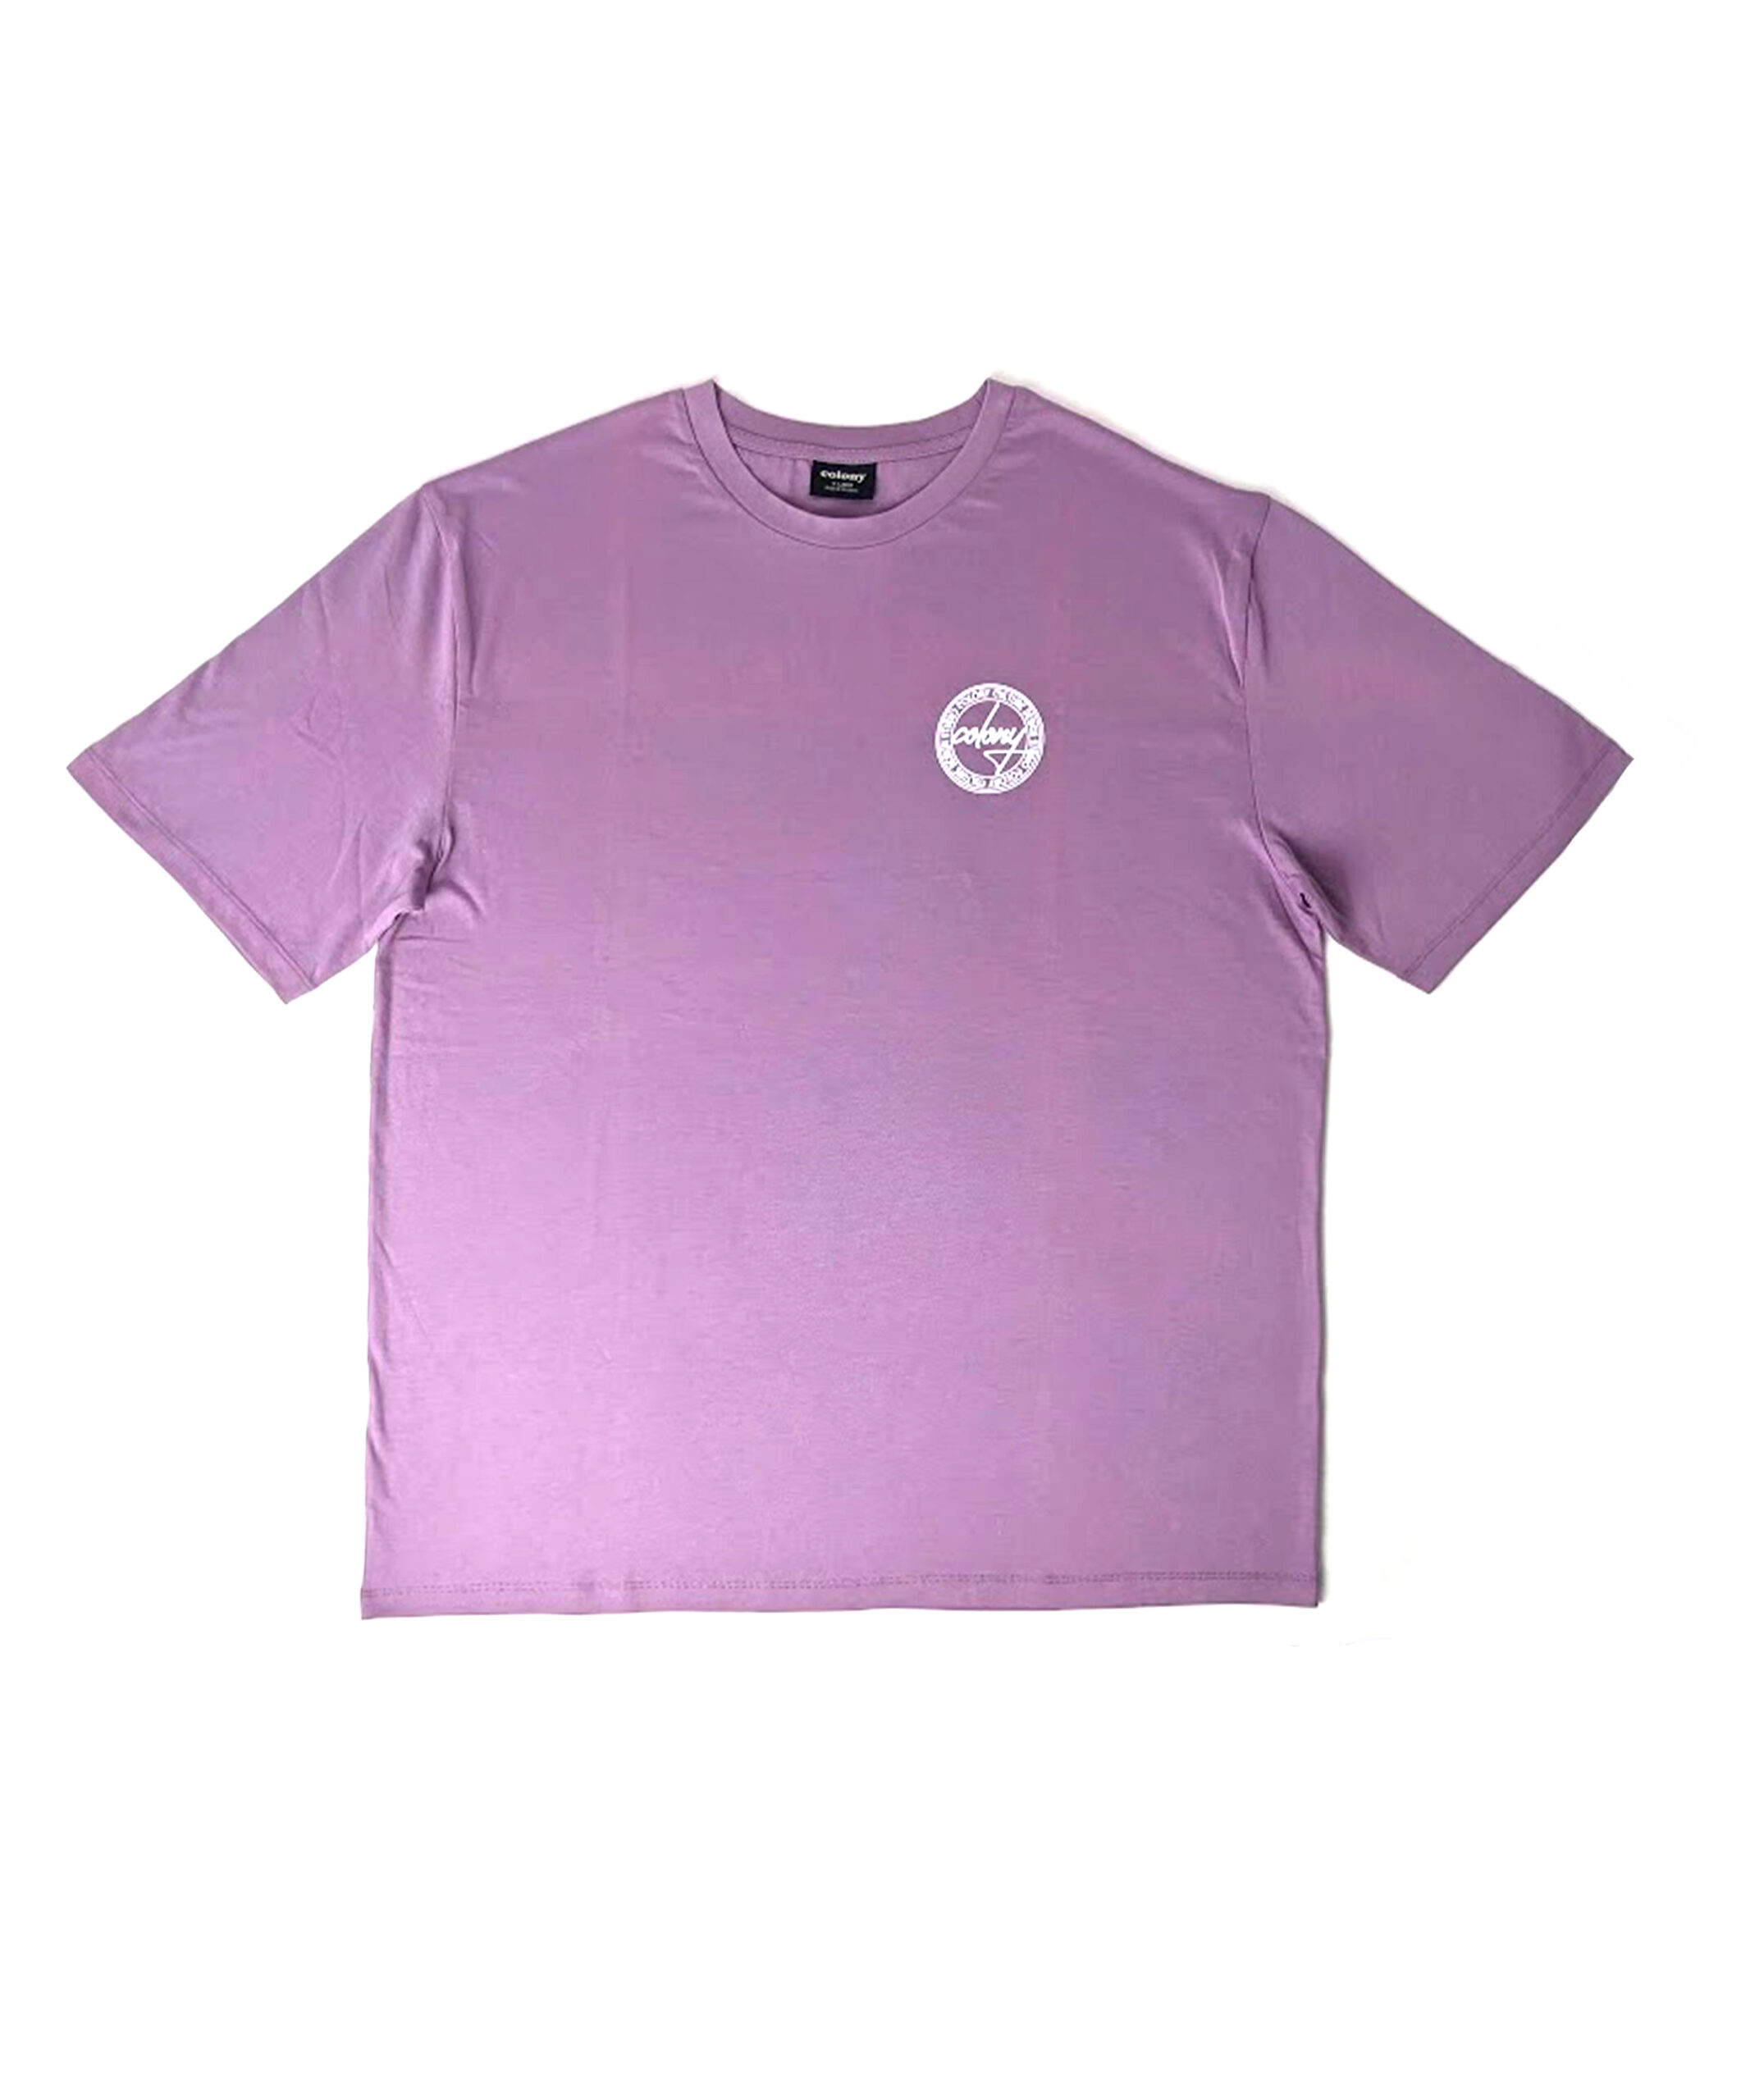 Oversized Graphic Tshirt - Studio Tee in Purple